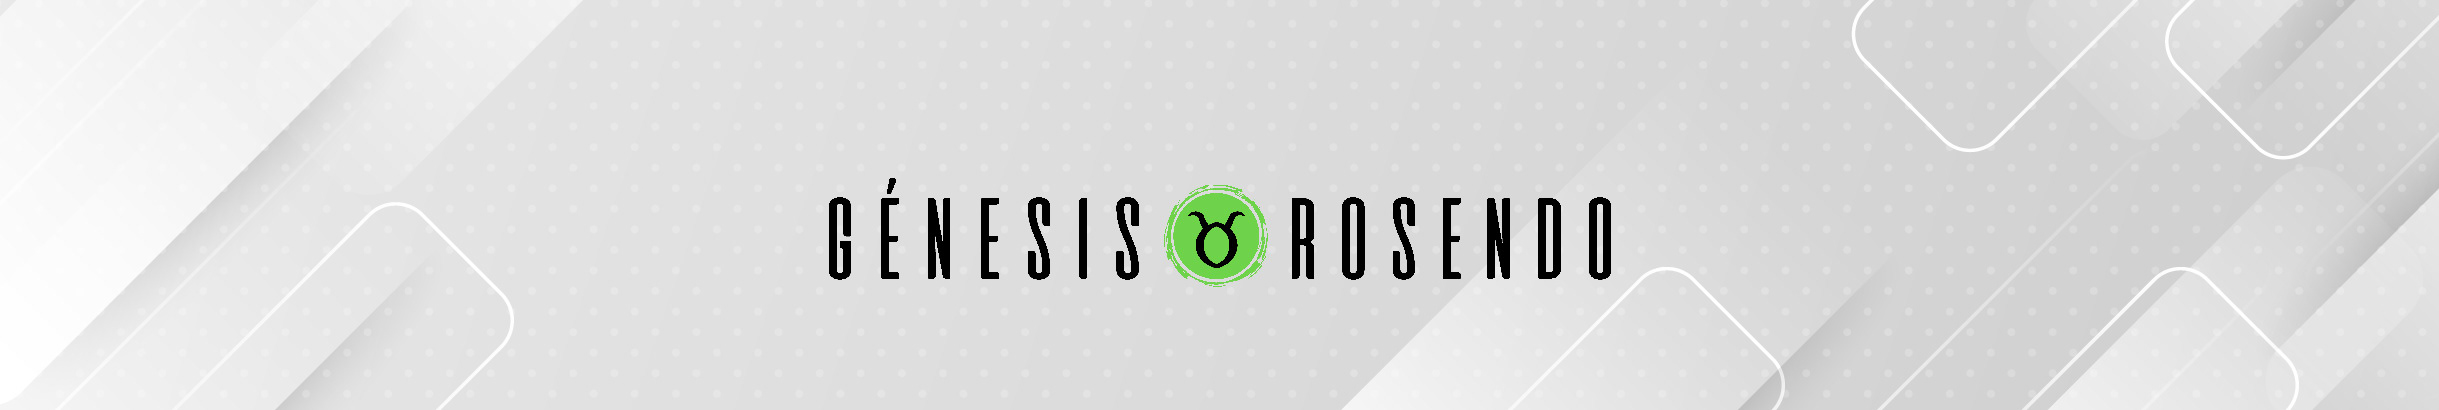 Genesis Rosendo's profile banner